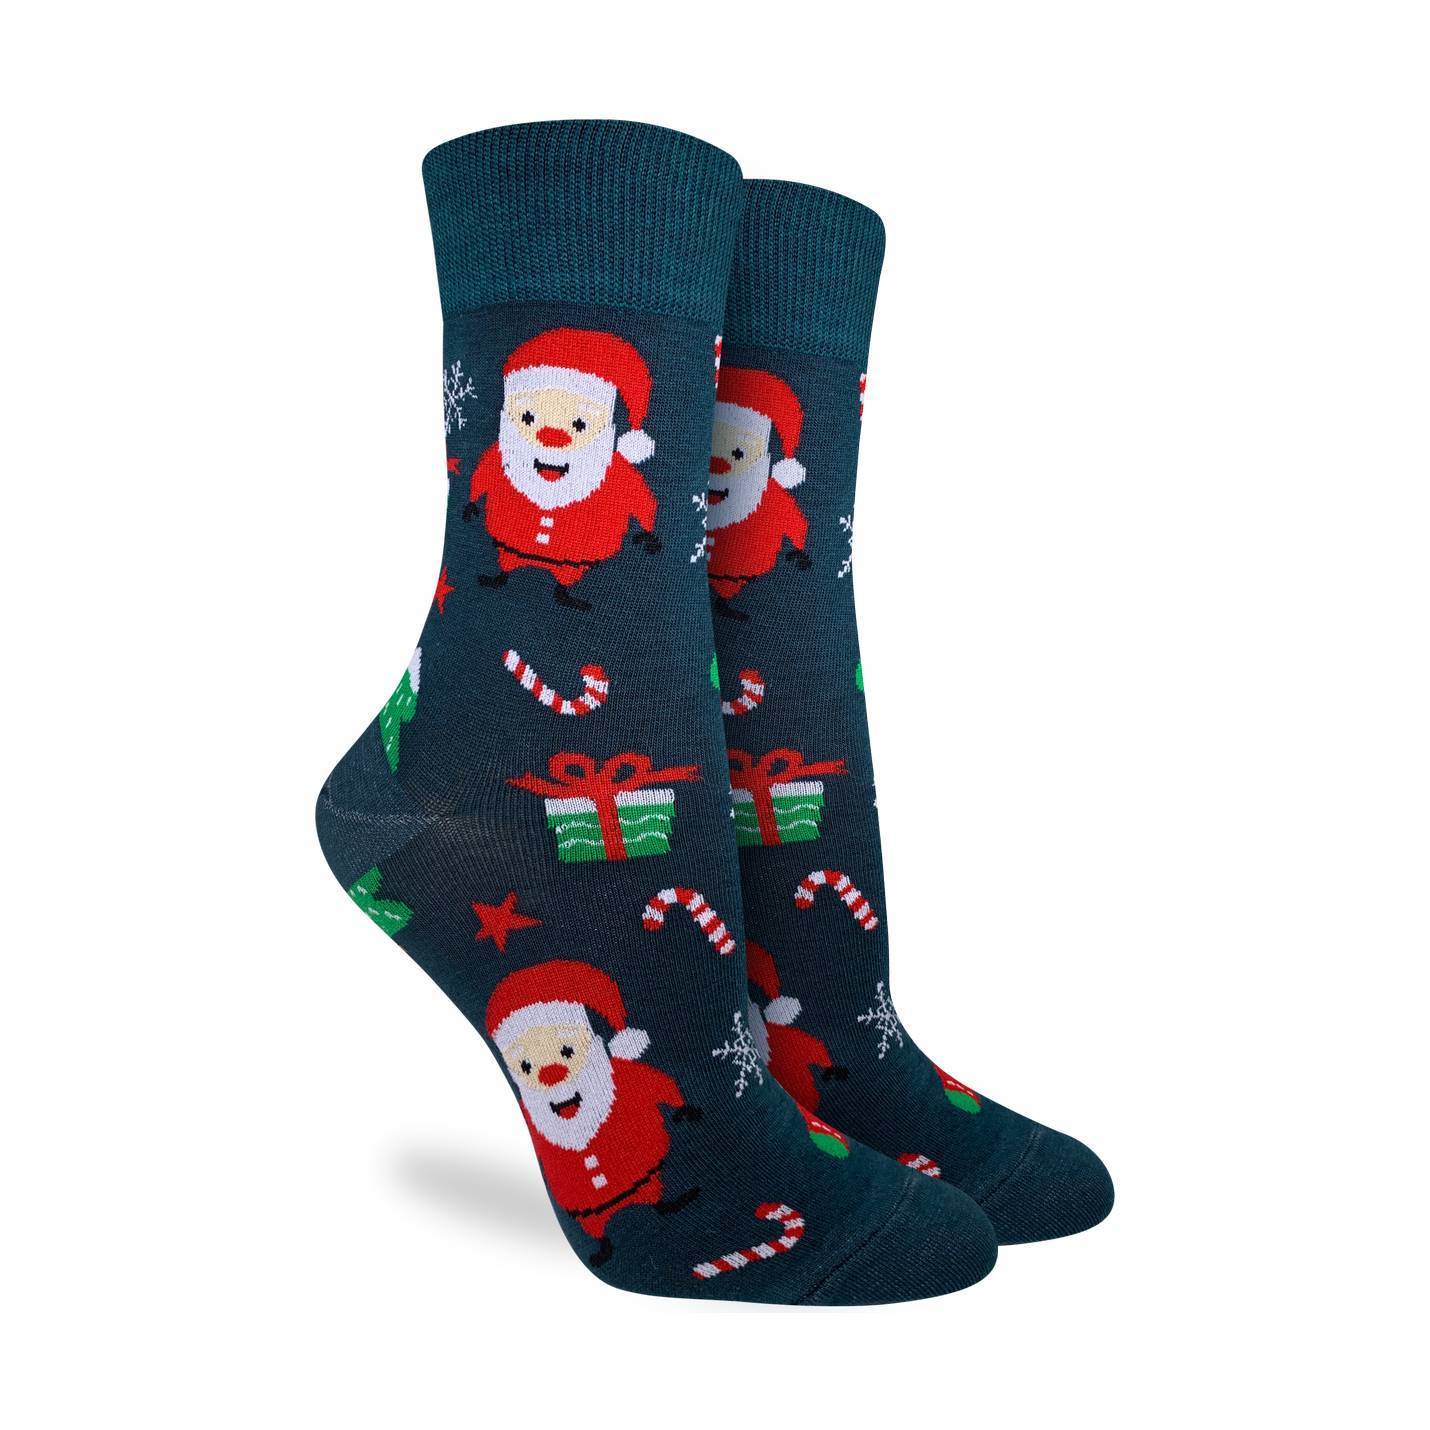 Women's Santa and Rudolph Socks - Shoe Size 5-9